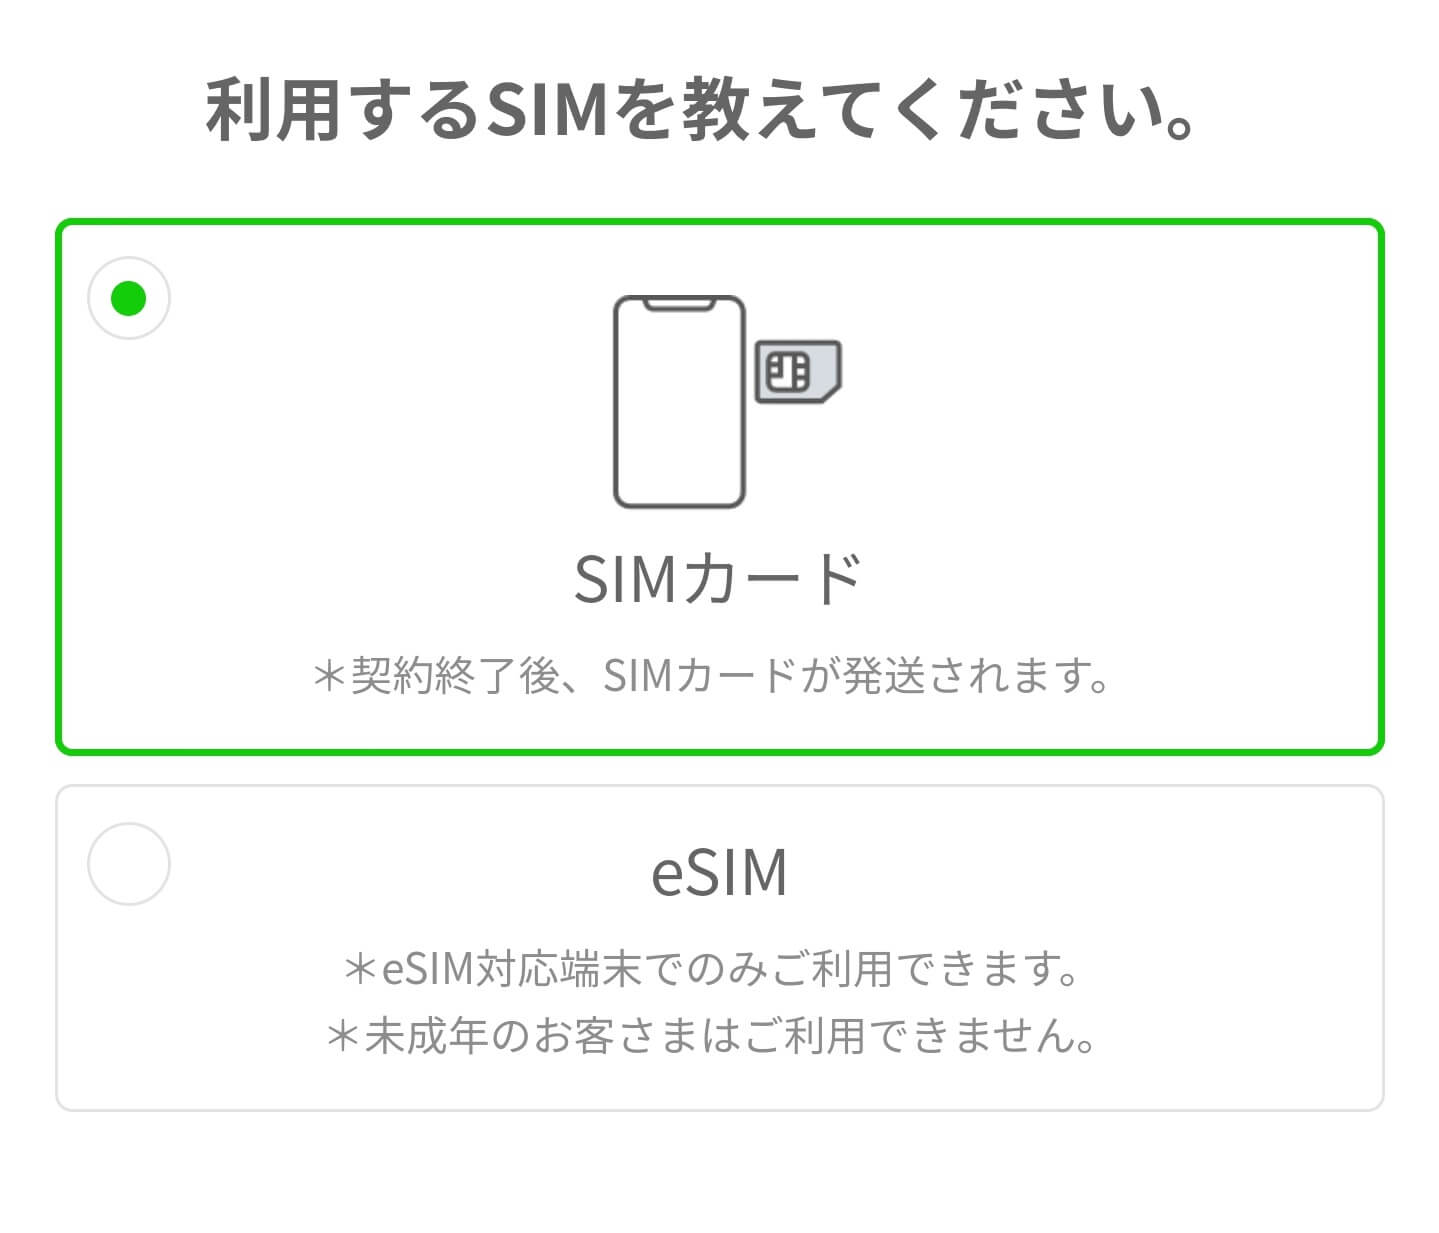 linemo-application-sim-type-select 絶対に格安SIM選びで失敗しないLINEMO(ラインモ)の解説サイト